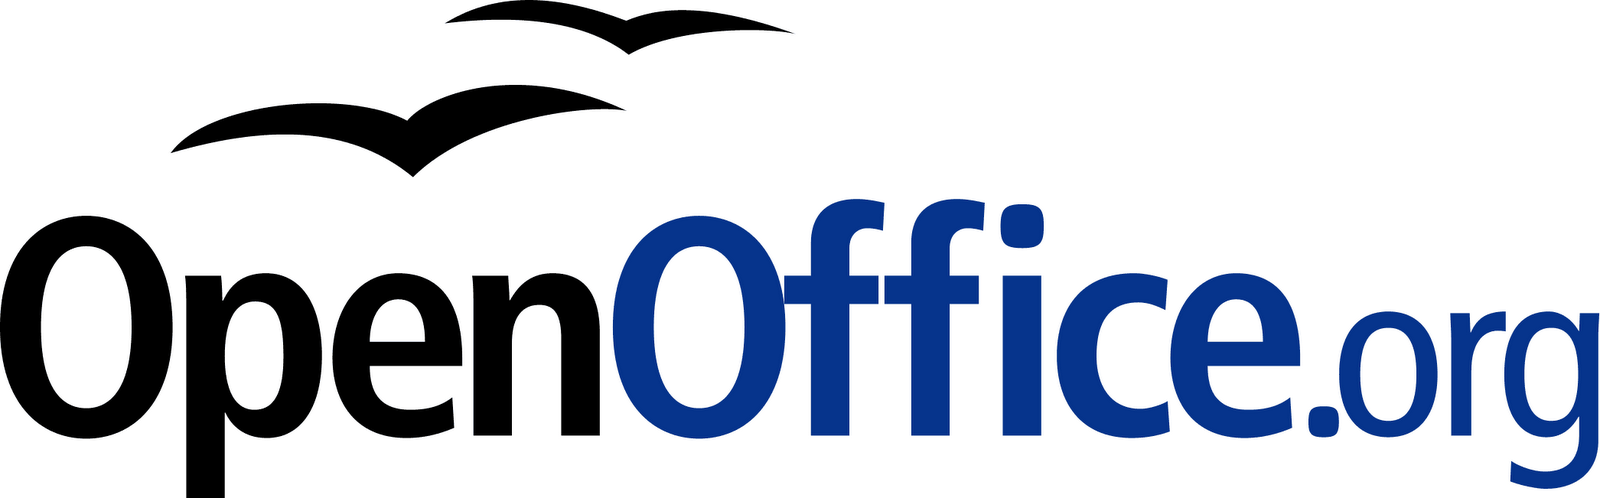 [openoffice-logo.png]